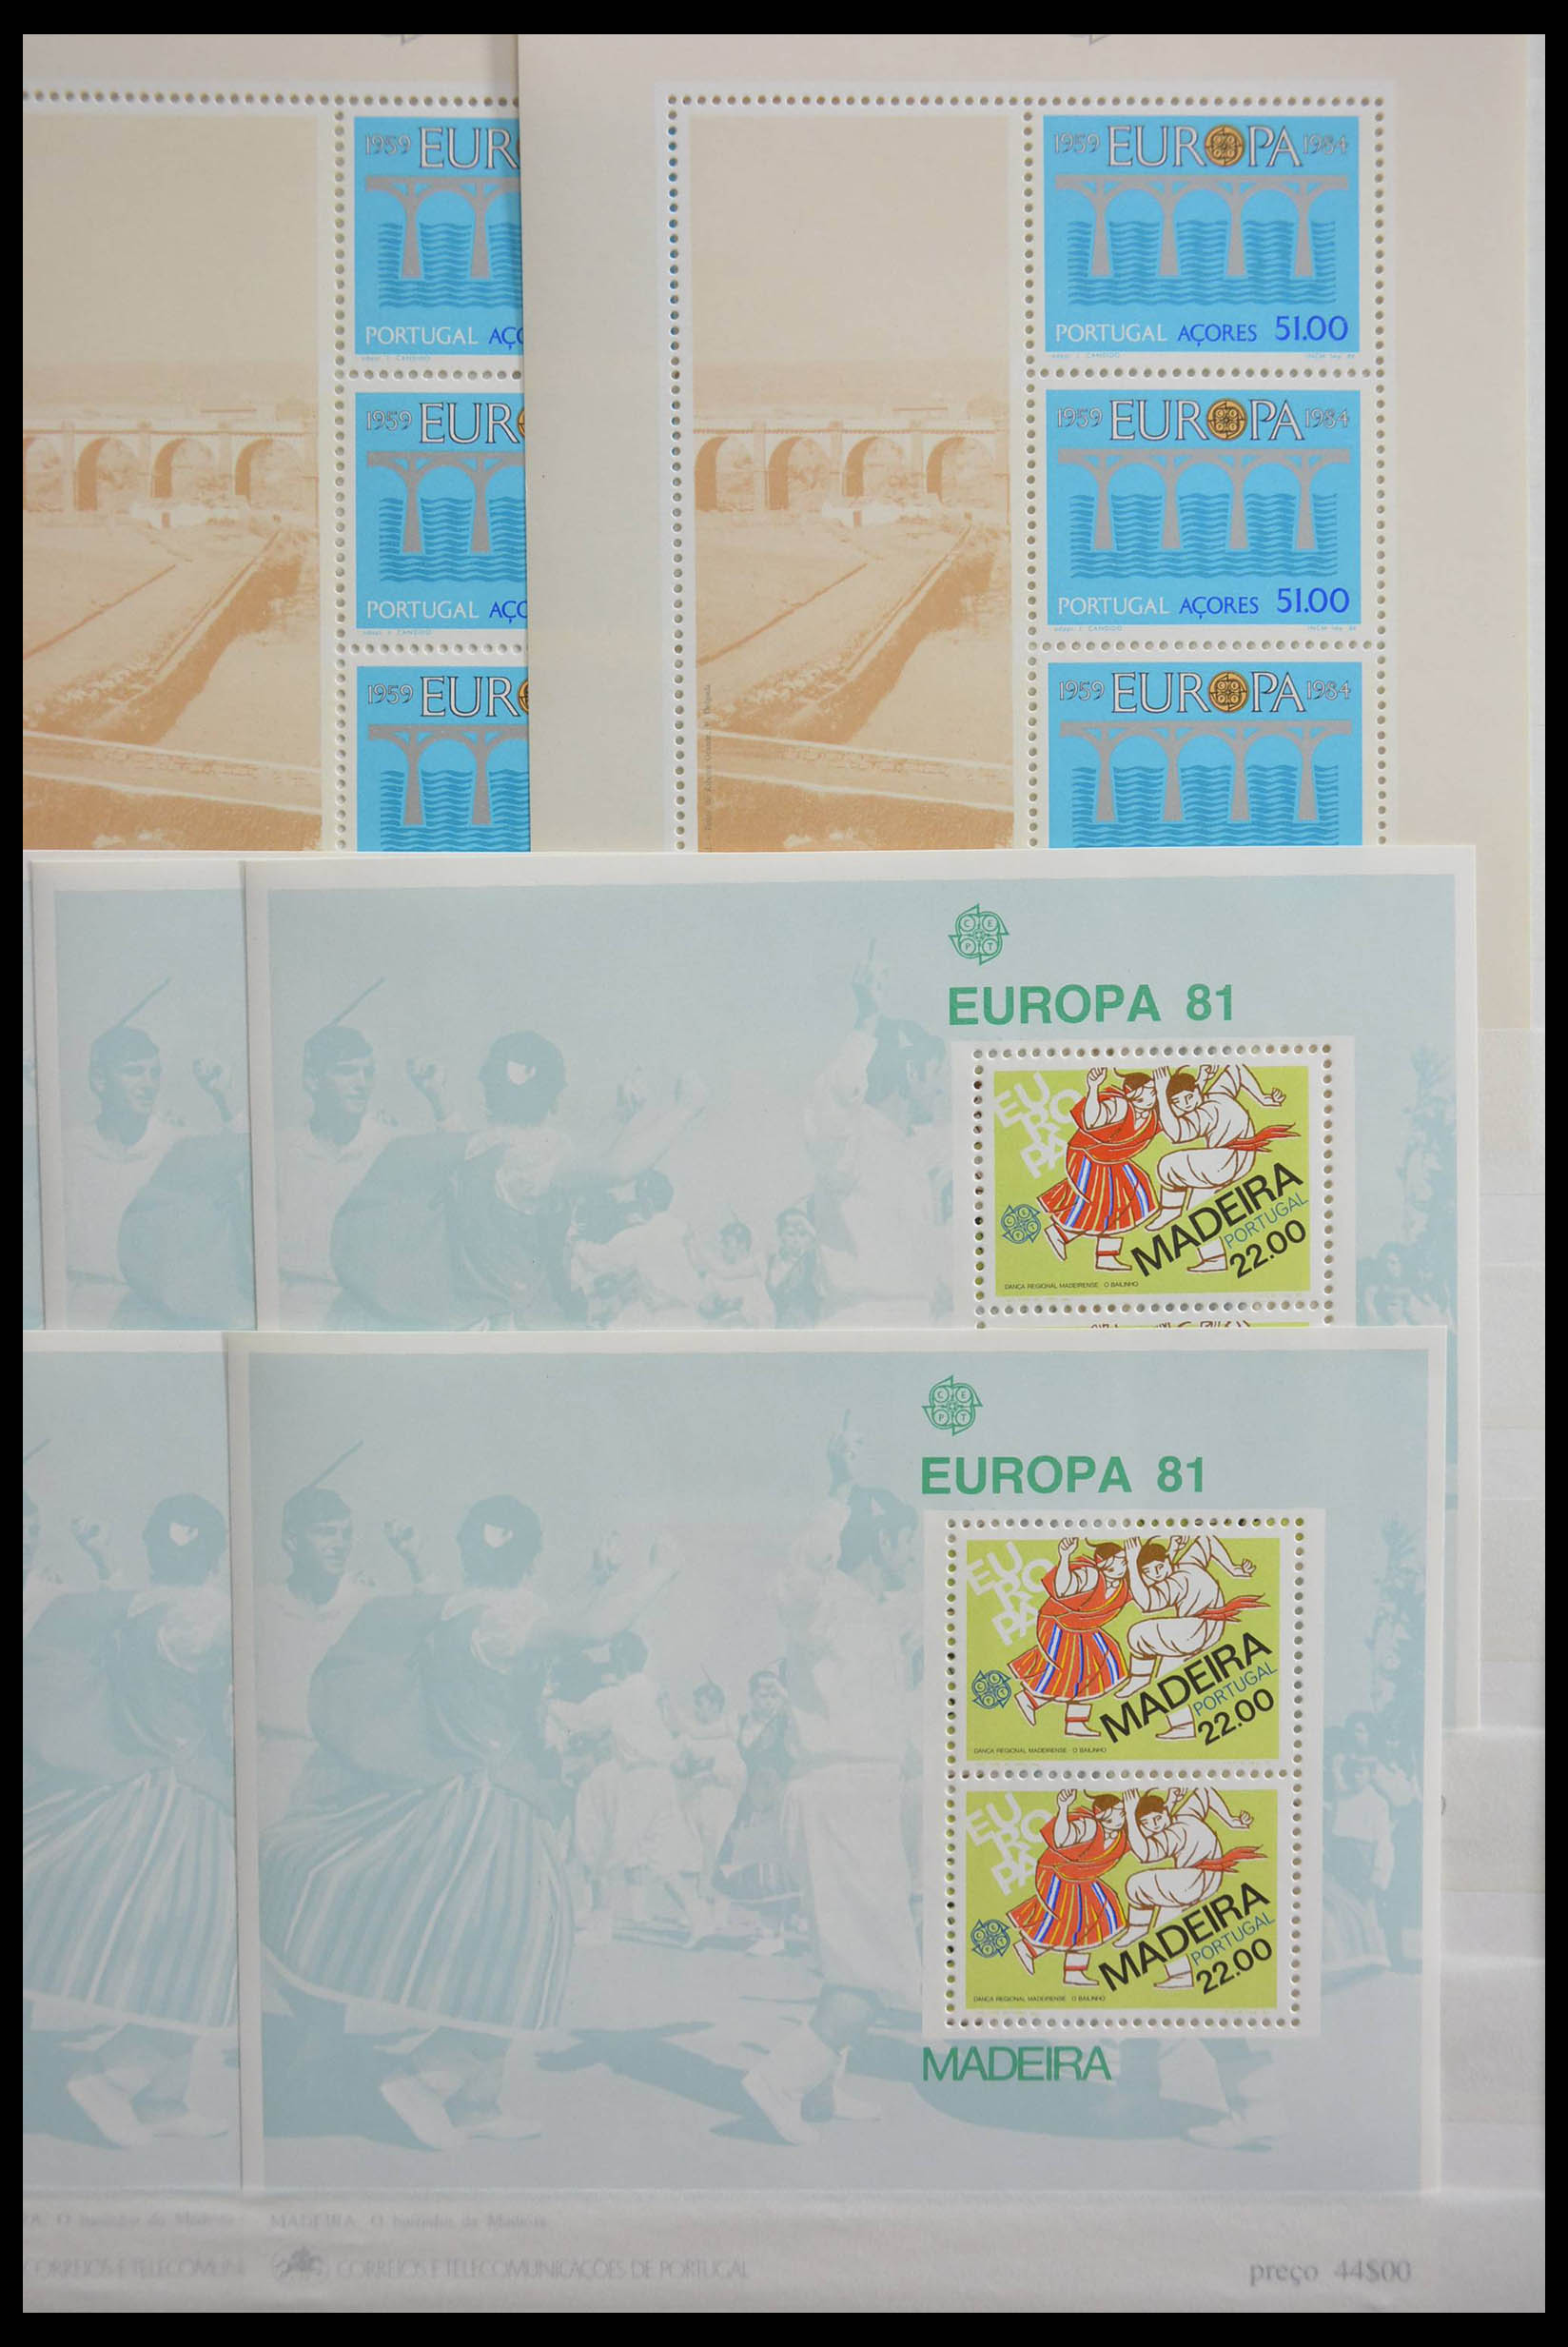 28540 082 - 28540 Portugal souvenir sheets.